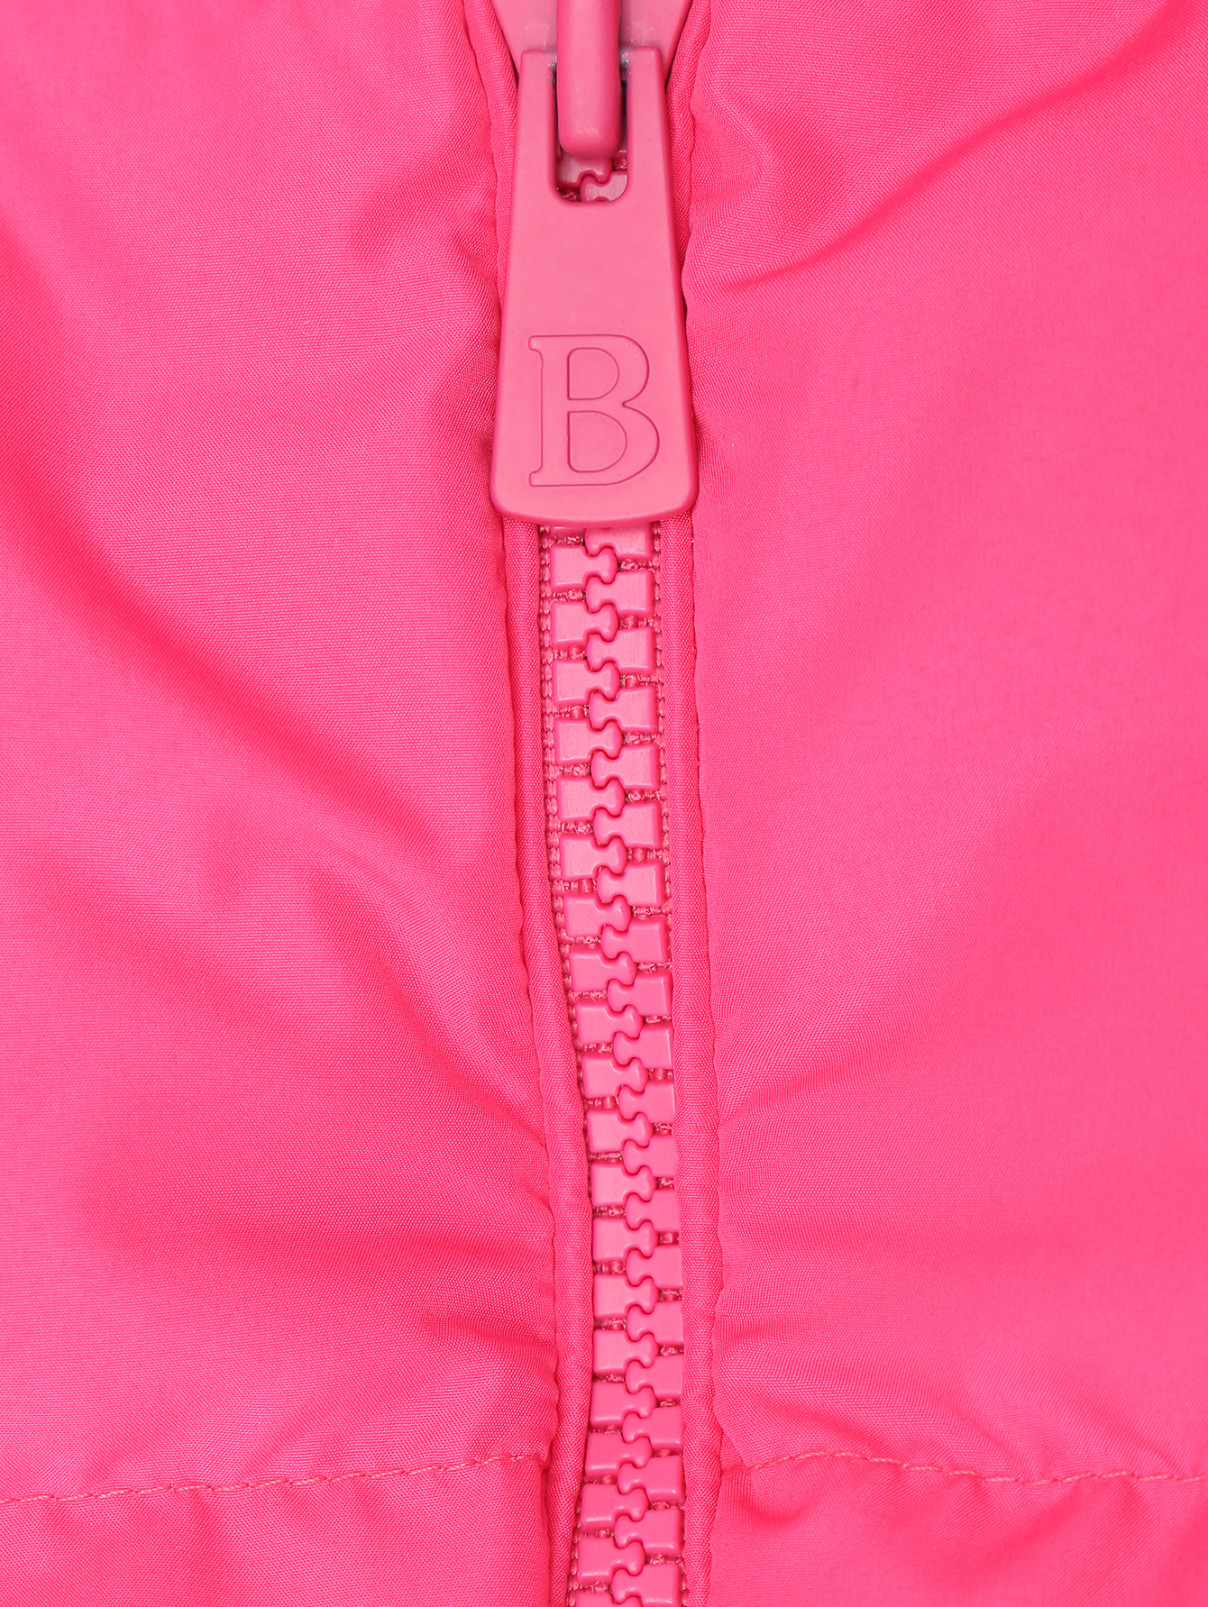 Пуховик со шнурком на талии Bacon  –  Деталь  – Цвет:  Розовый